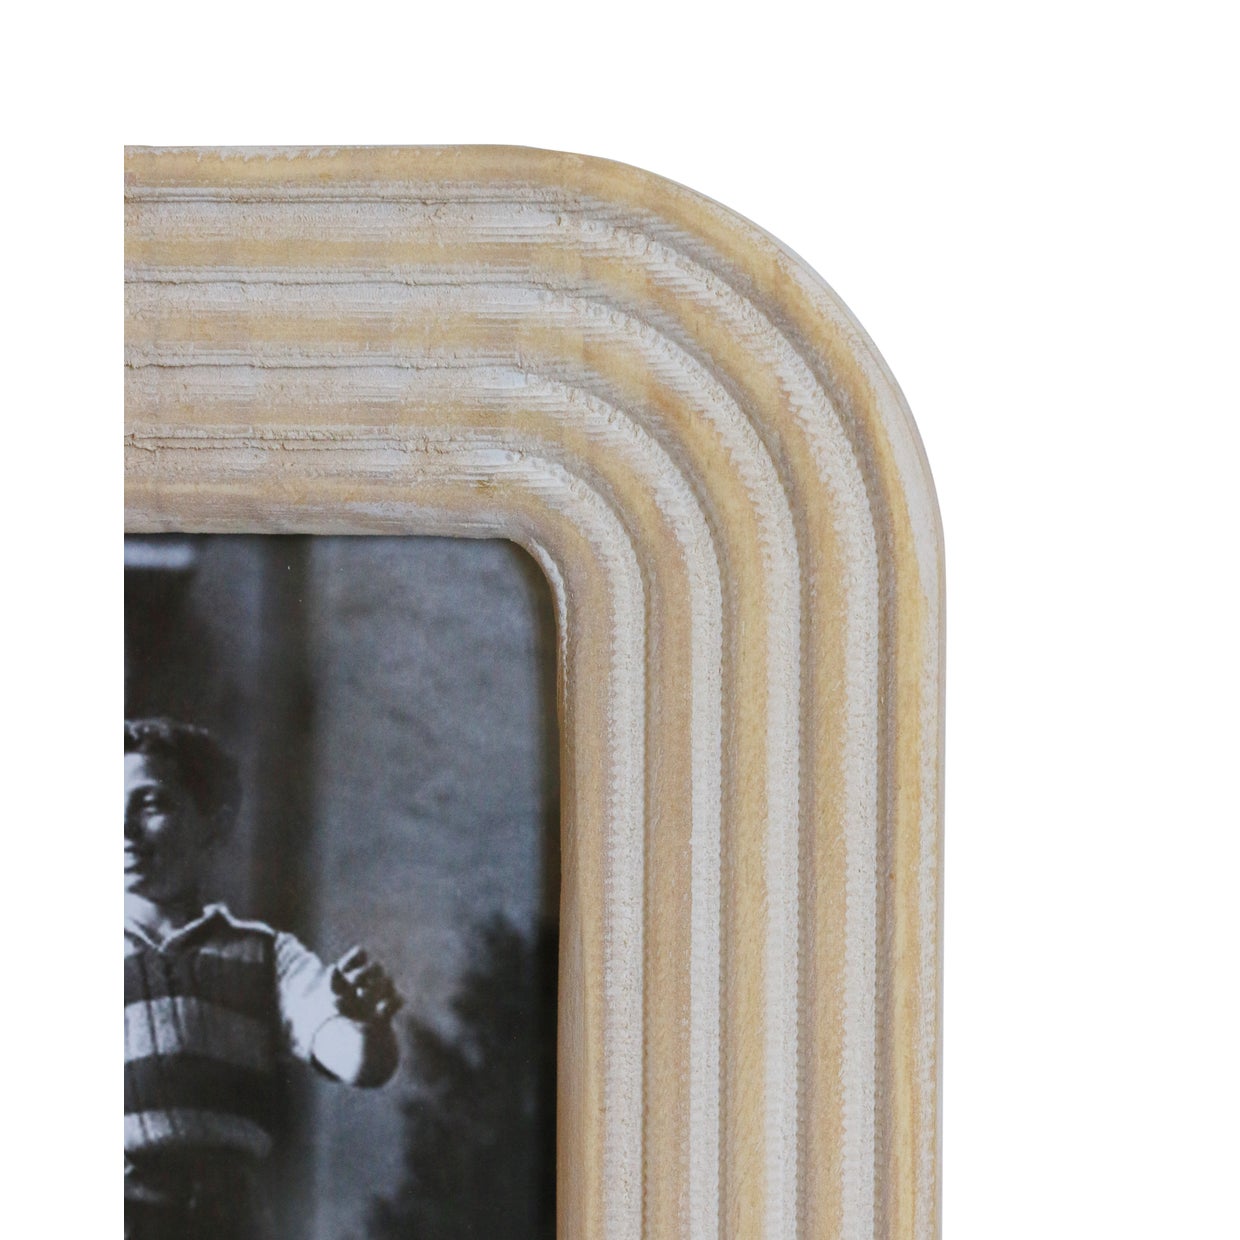 Wooden Frame with Ridged Detai l5x7